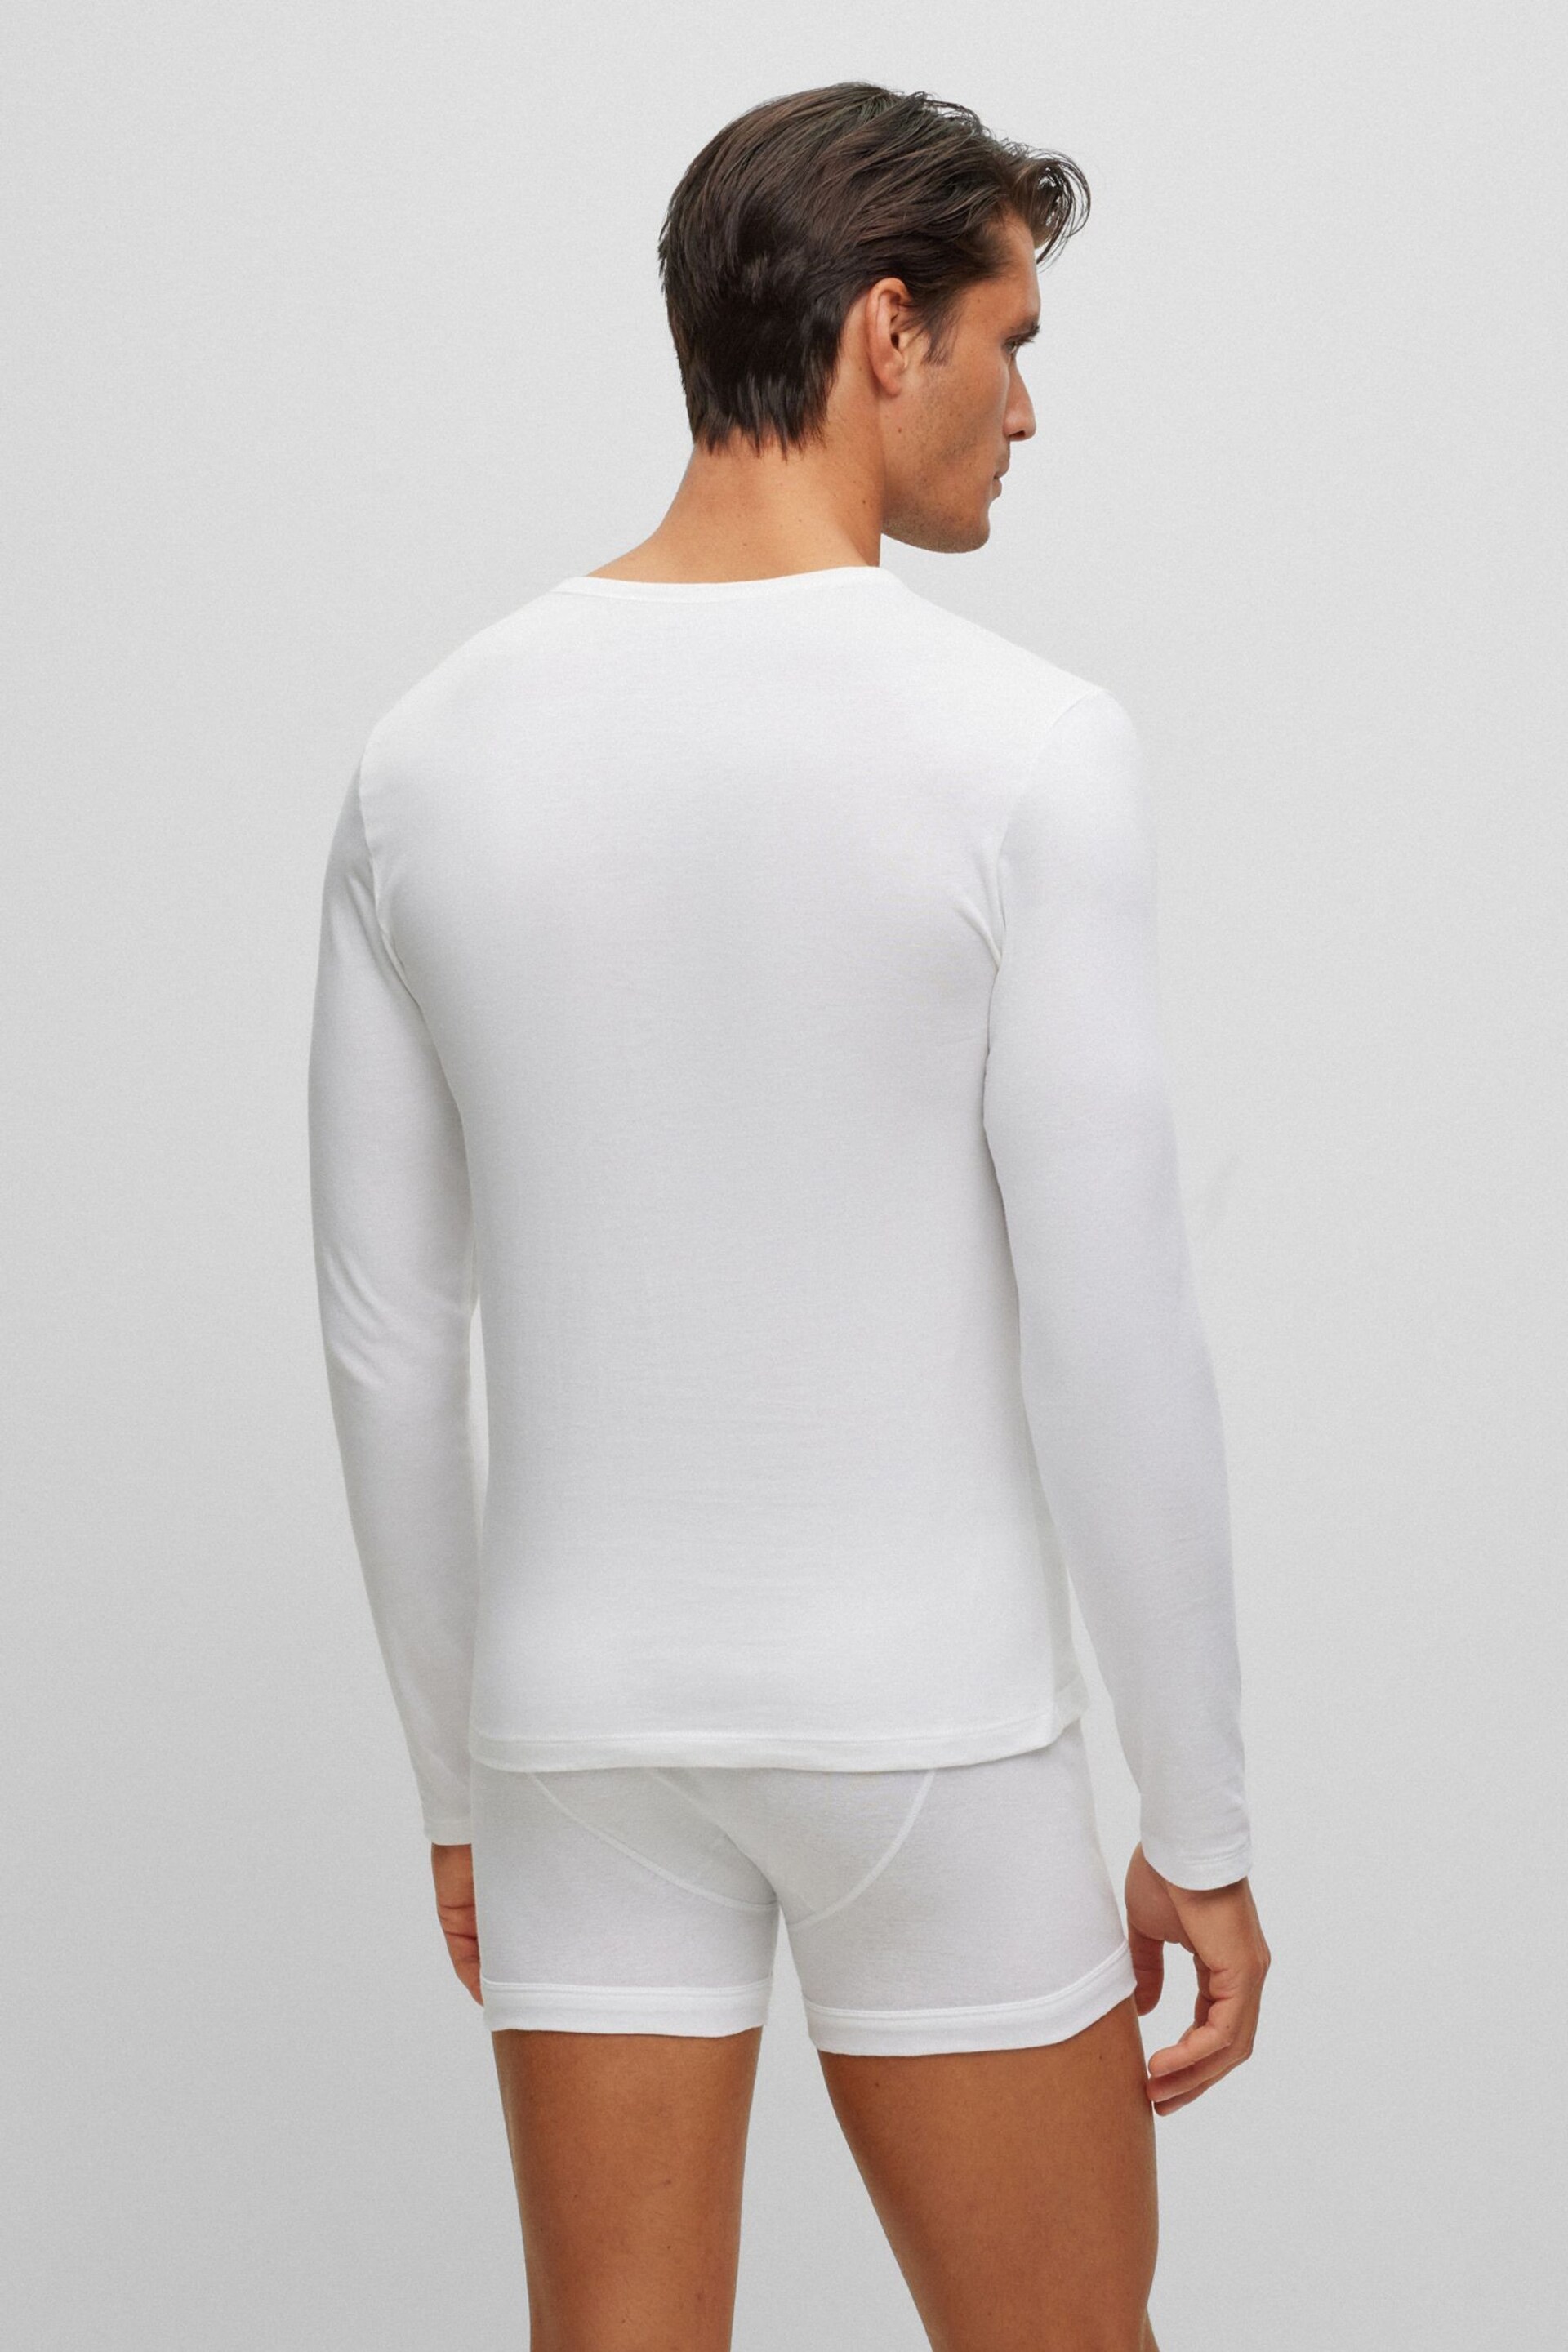 BOSS Black Long Sleeve T-Shirt 3 Pack - Image 8 of 9